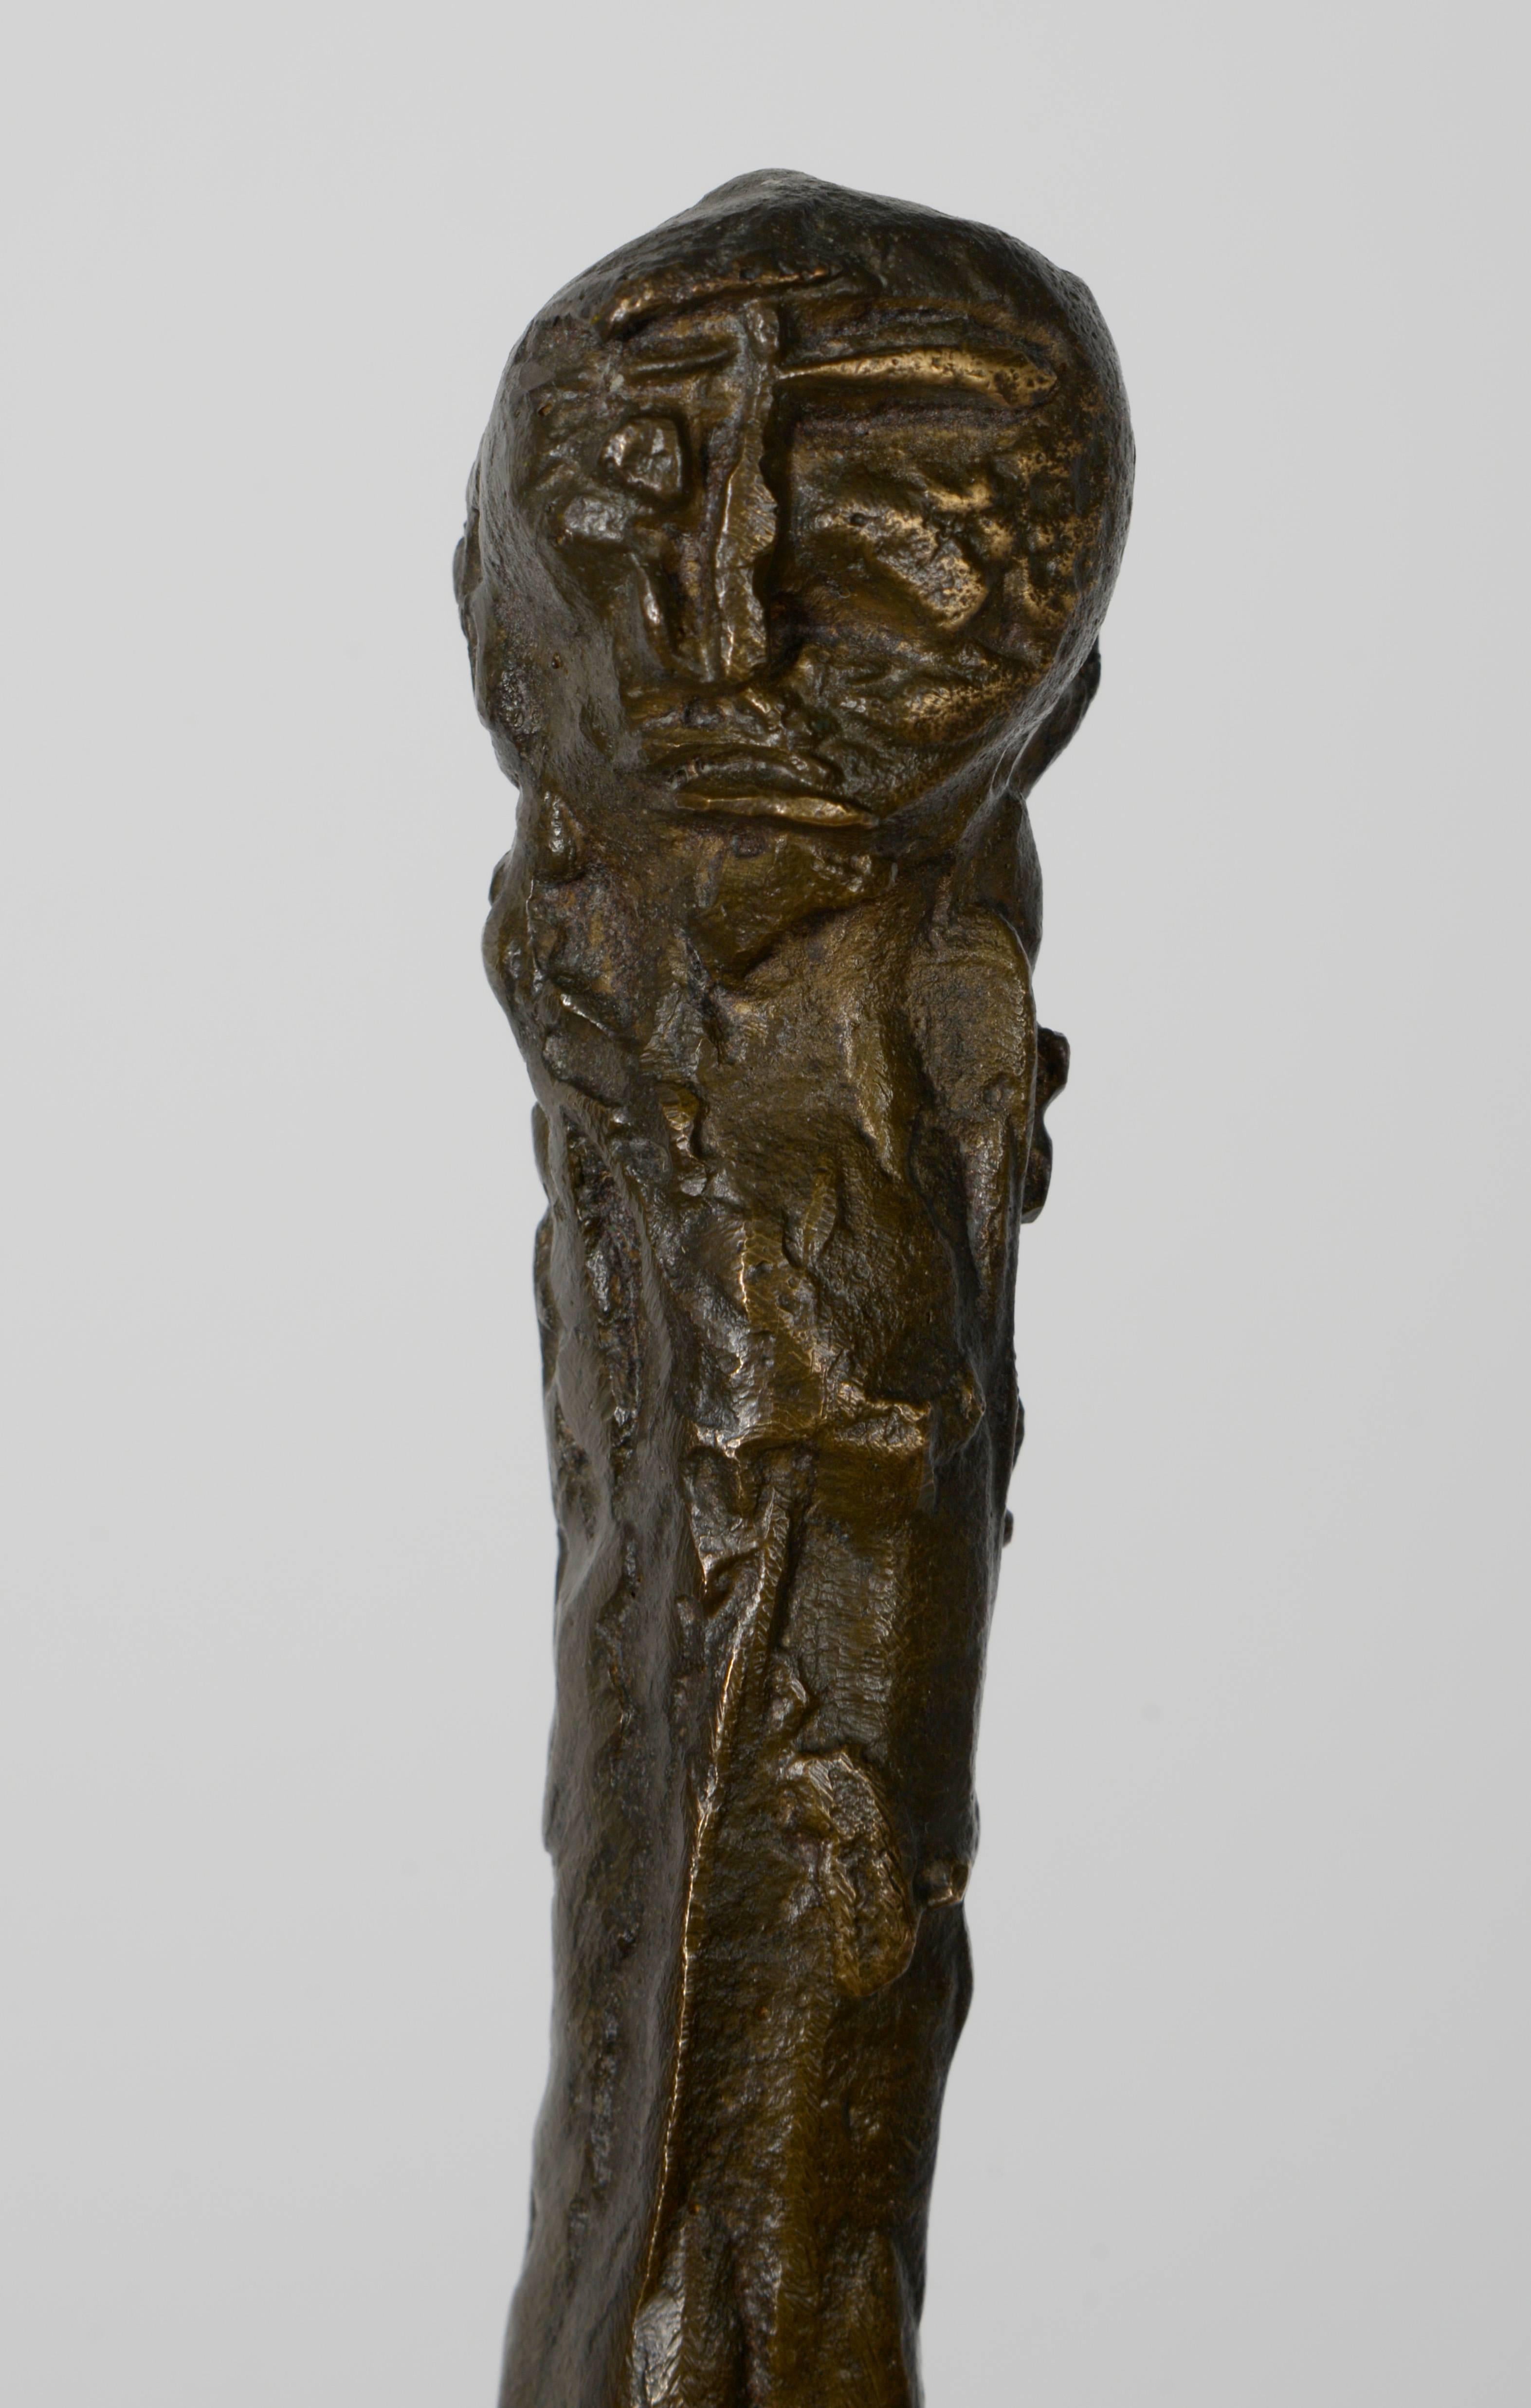 Large Albert Féraud bronze sculpture
Signed A. Feraud 56
Cast by Landowski 1996 under artist's control (foundry seal).